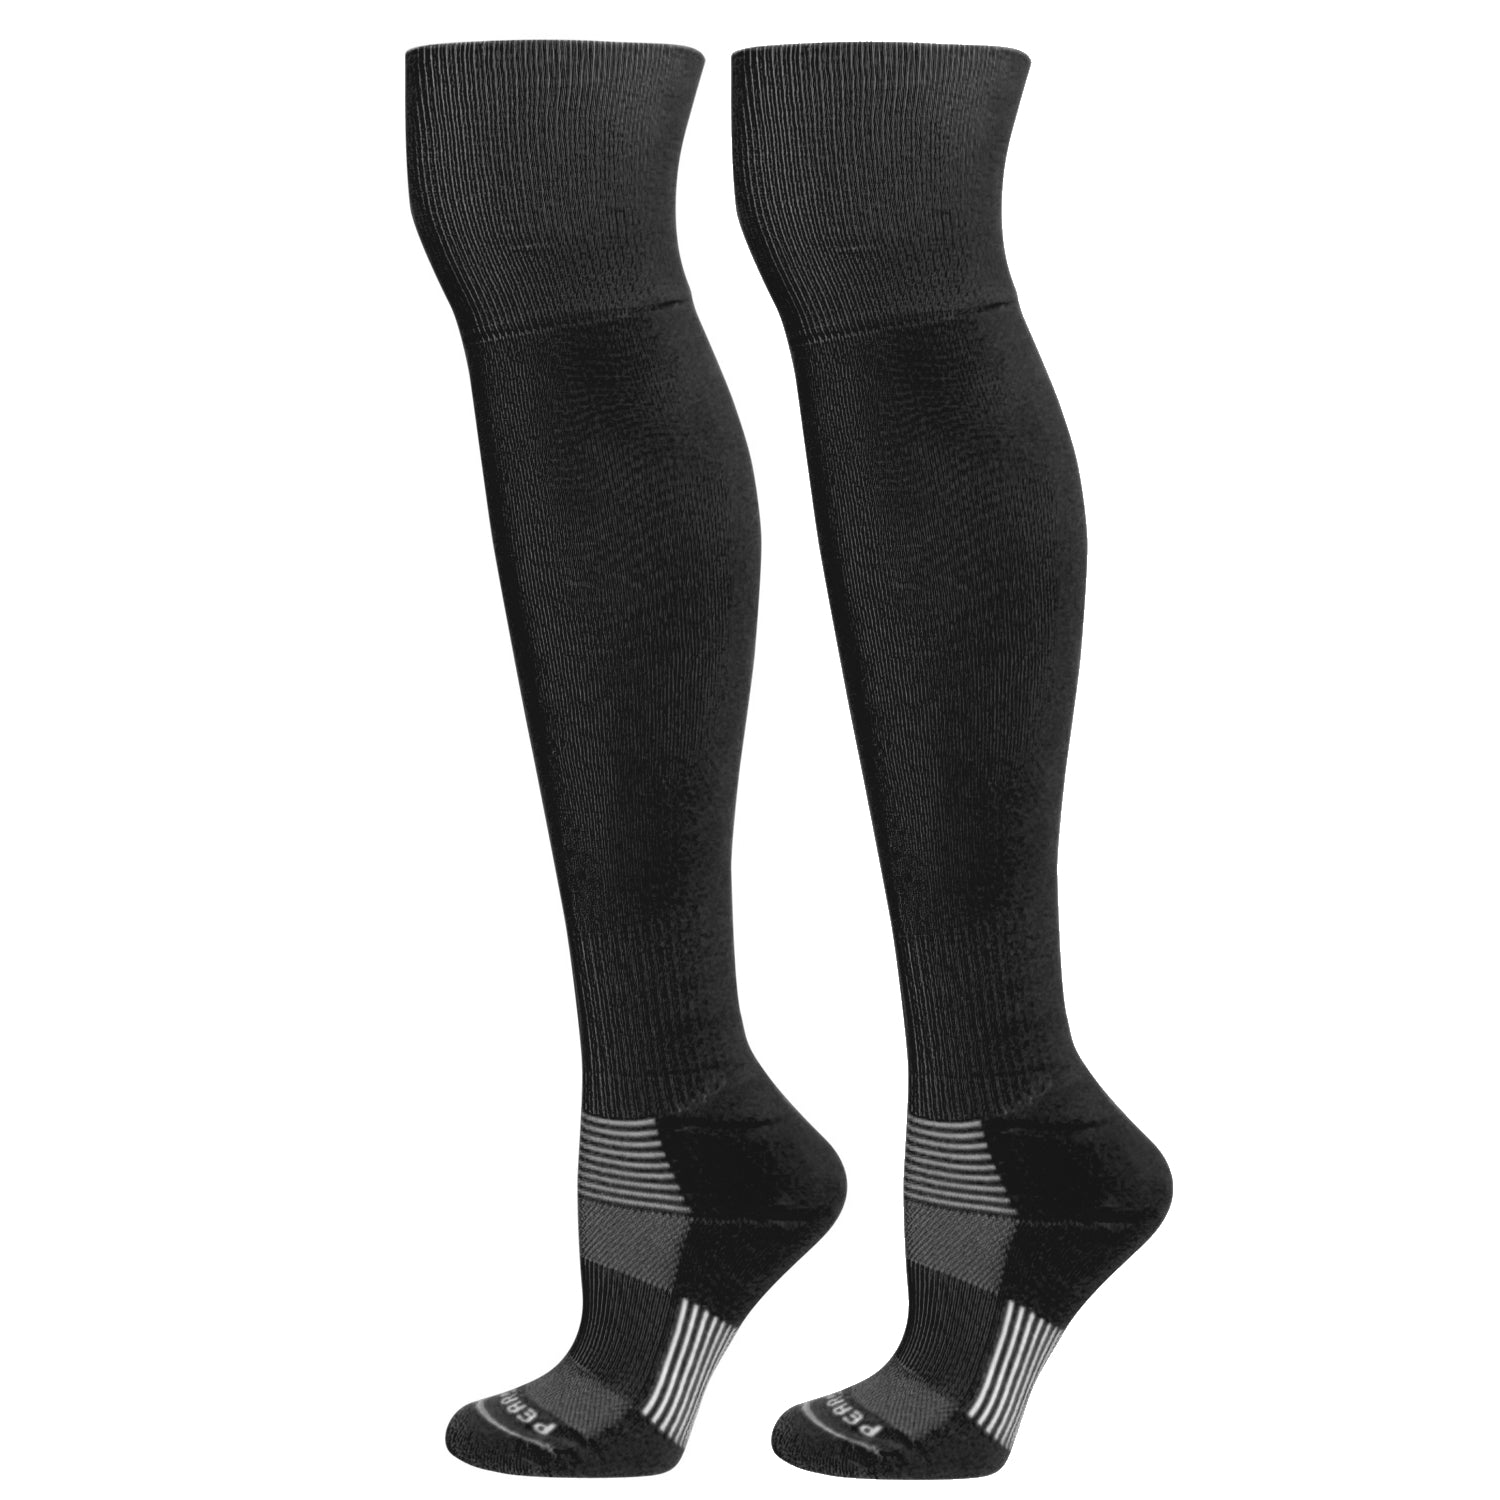 MK Socks Extreme Over the Knee Sports Socks - Black – Mk Socks